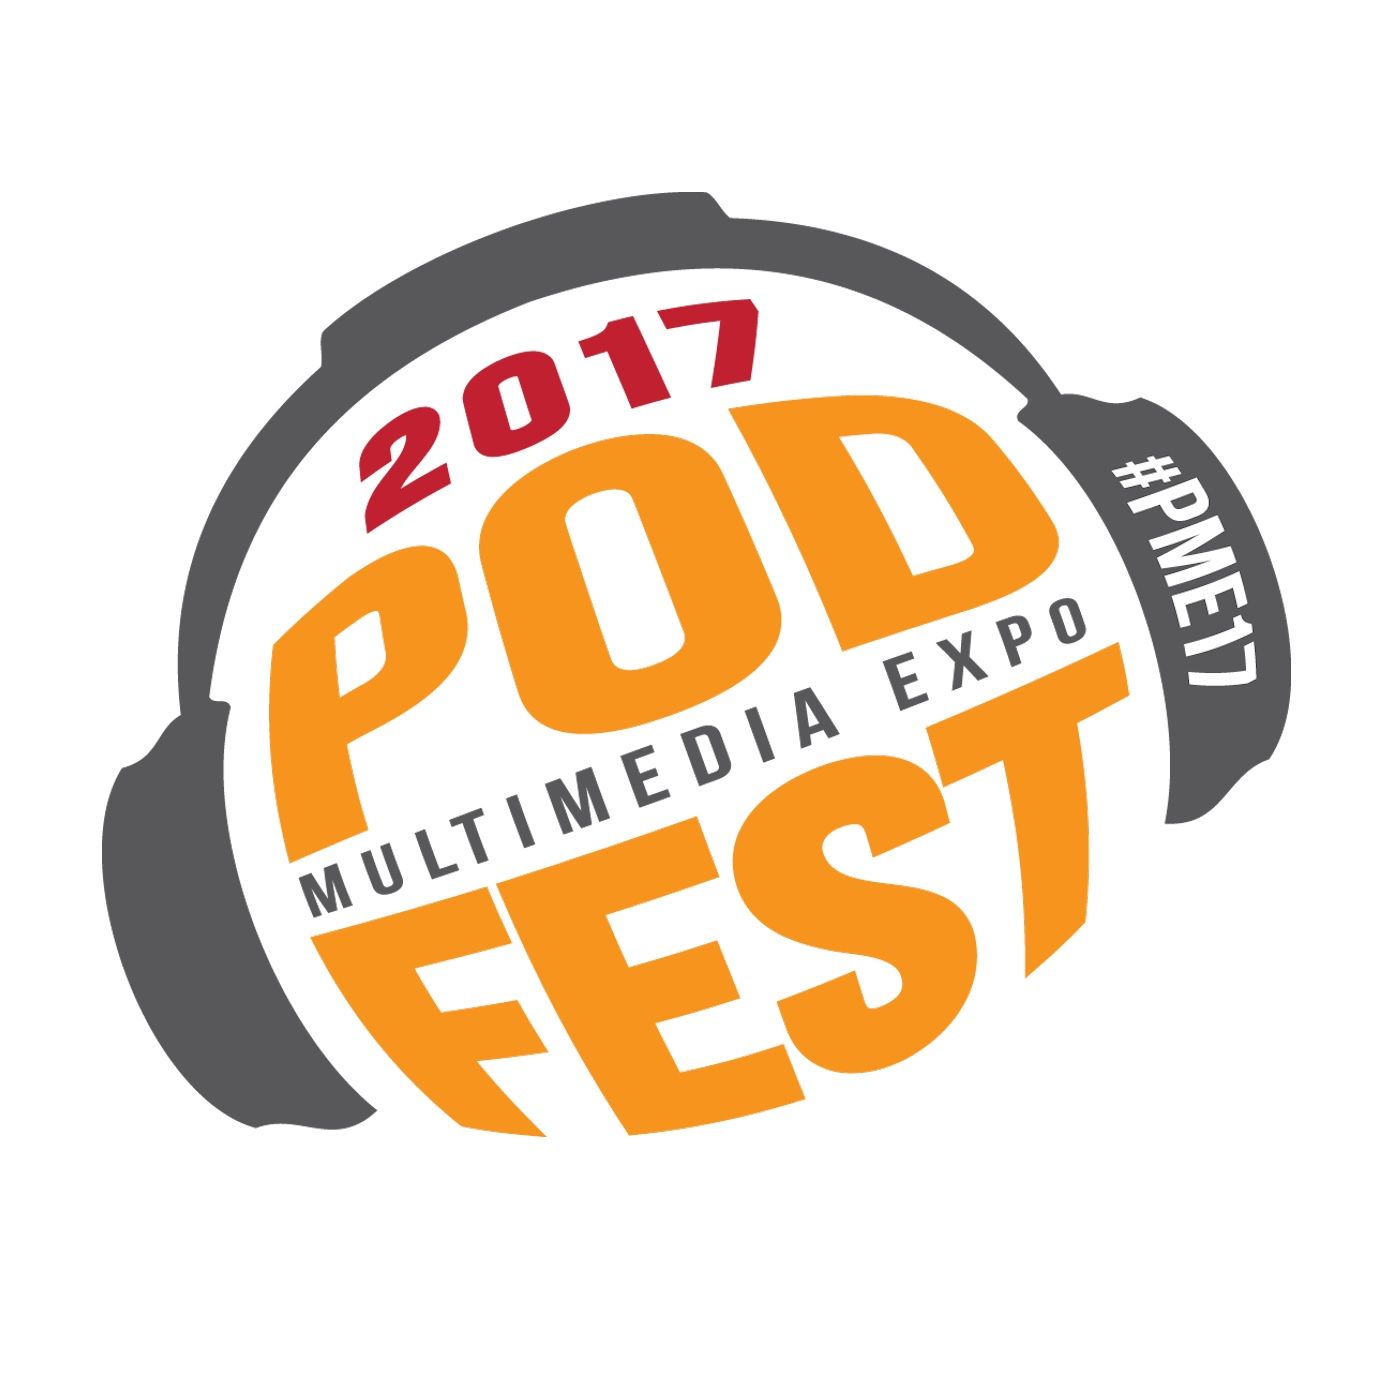 Live at Podfest Multimedia Expo 2017